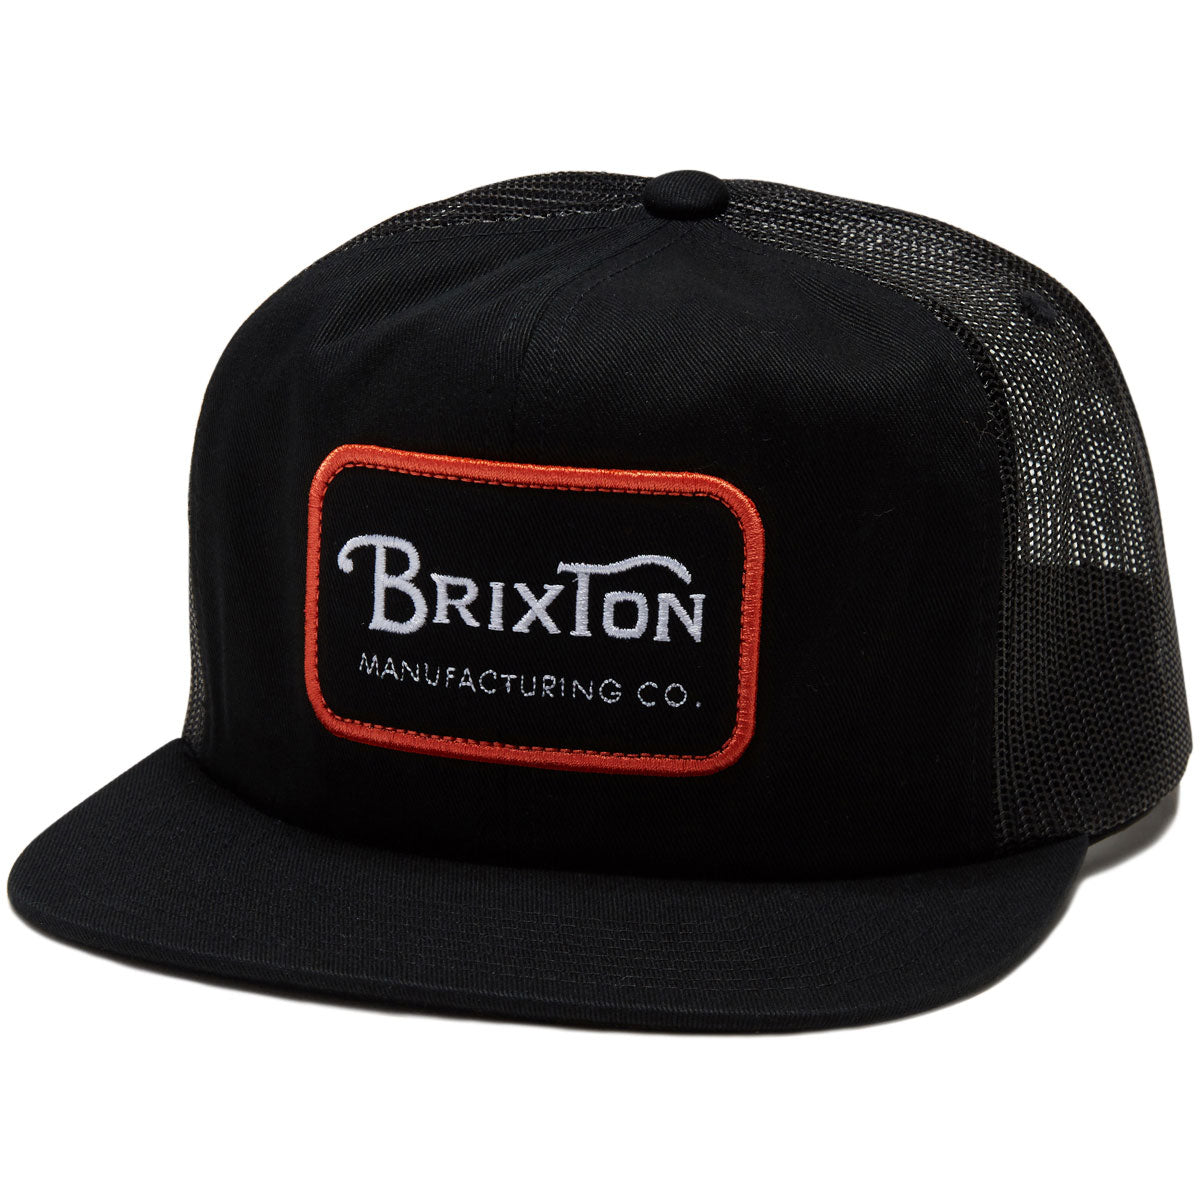 Brixton Grade Hp Trucker Hat - Black/Orange/White image 1